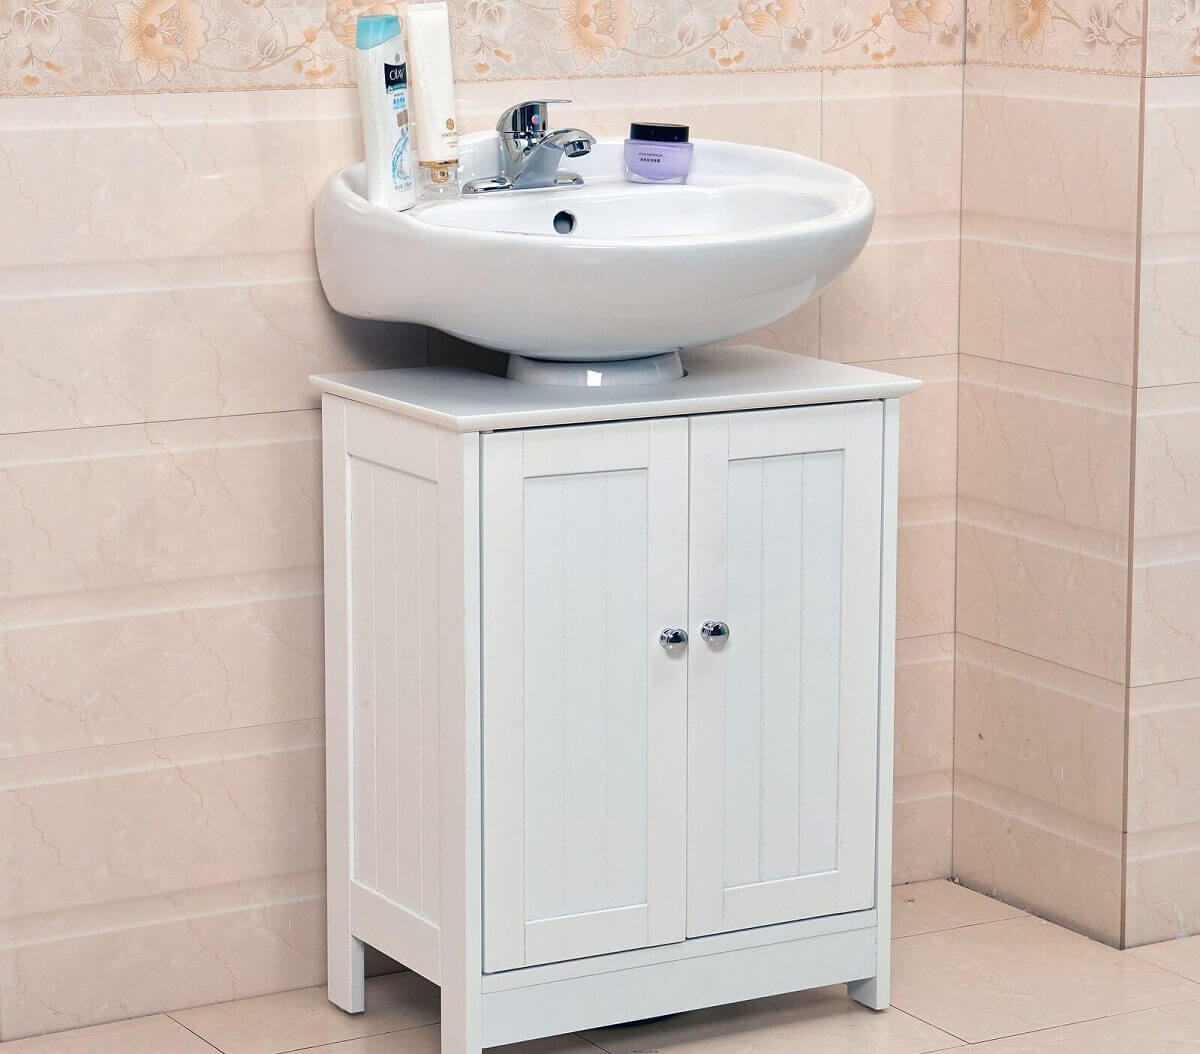 Pedestal Sink Storage Nana Workshop Bathroom Cabinet Freshsdg